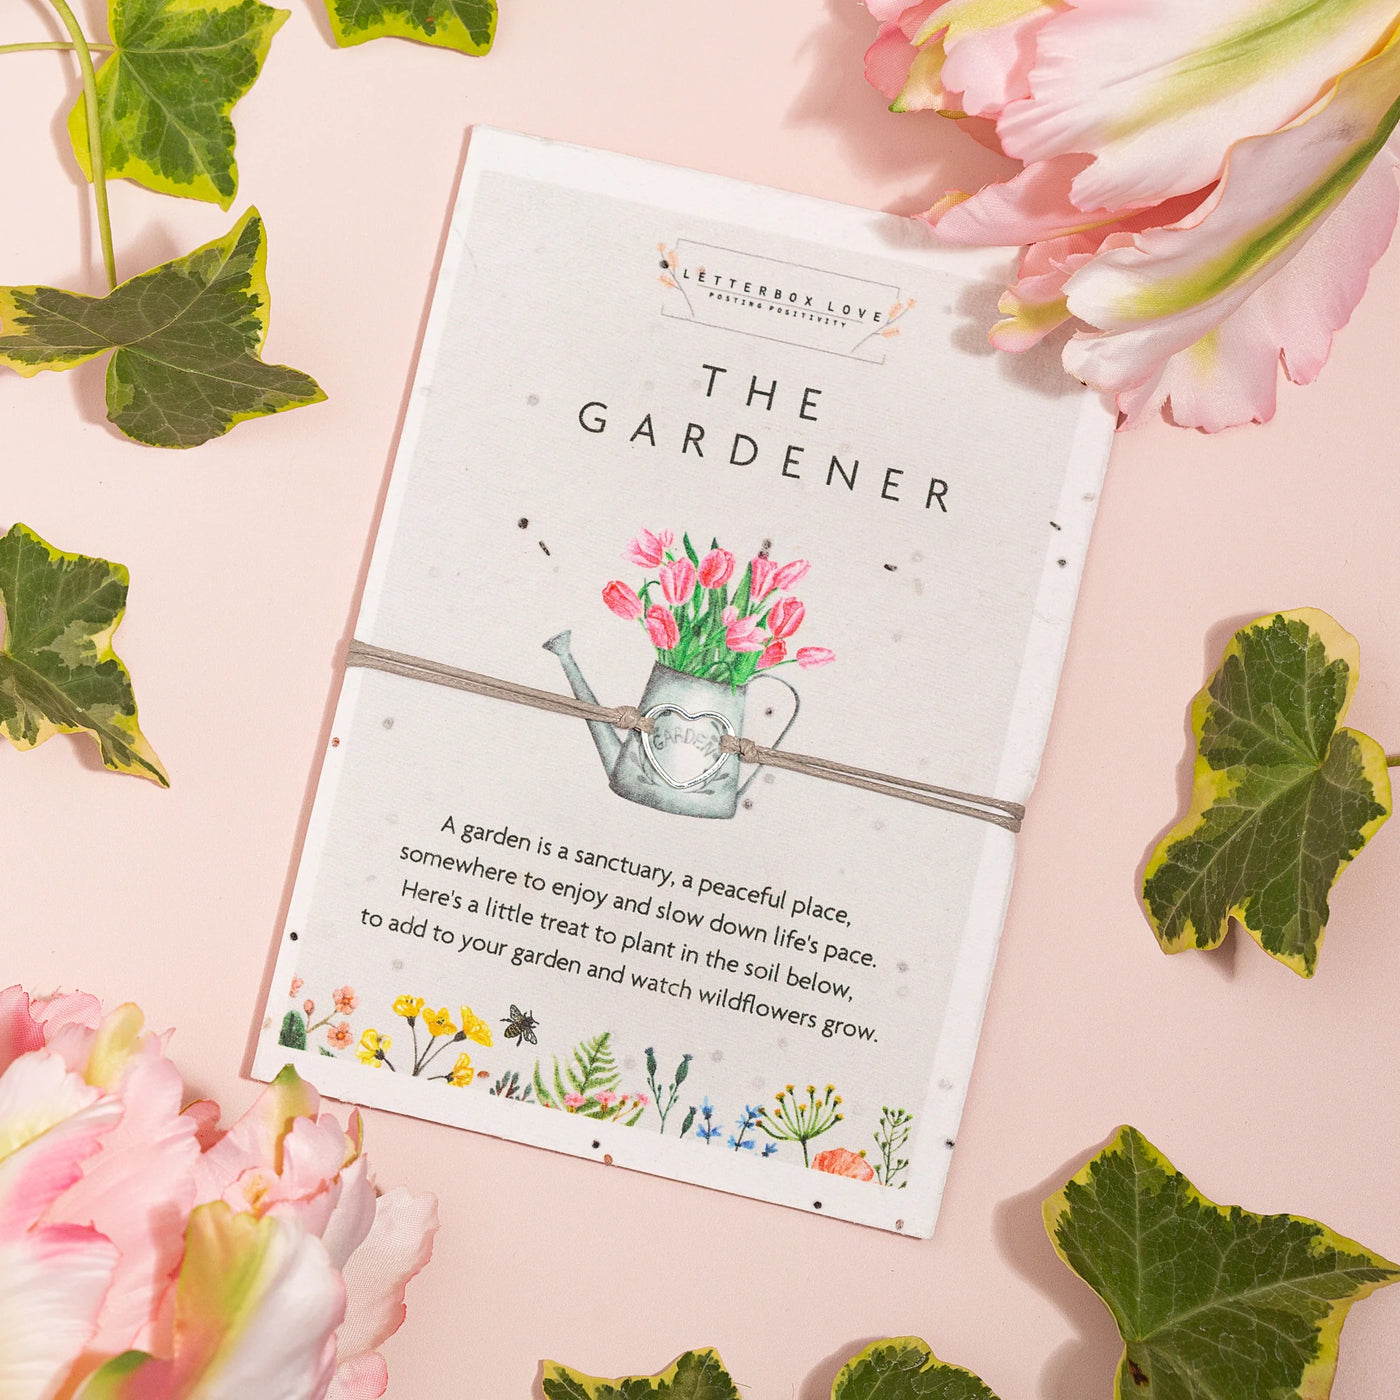 Letterbox Love The Gardener - Seeded Card & Wish Cord Bracelet